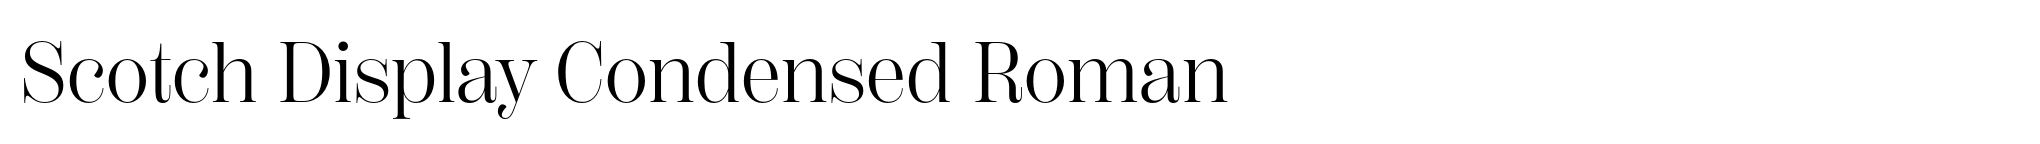 Scotch Display Condensed Roman image